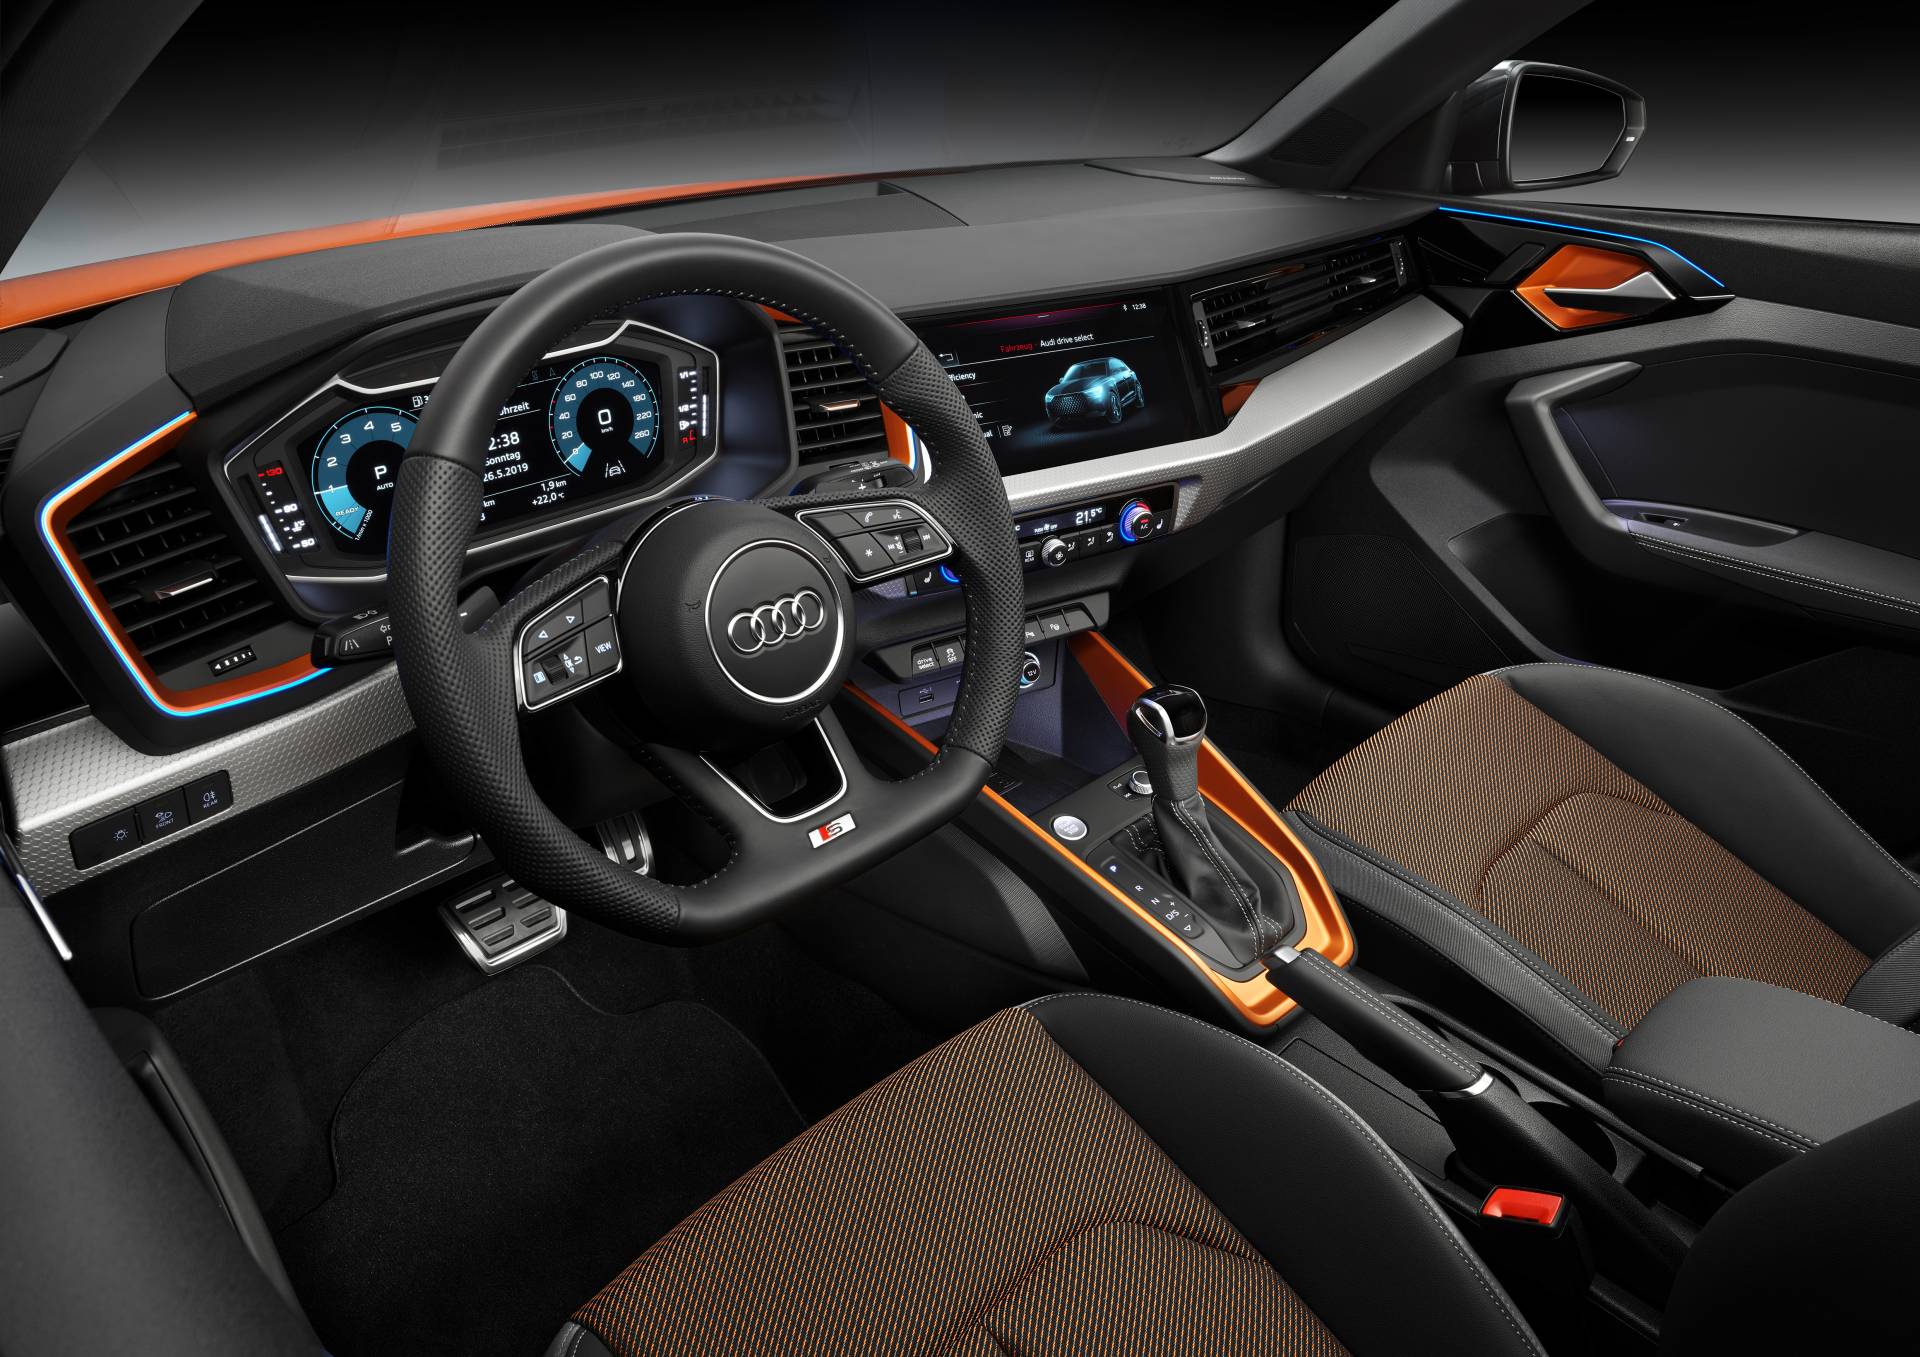 2020 Audi A1 Citycarver: The new soft-roader for urbanites